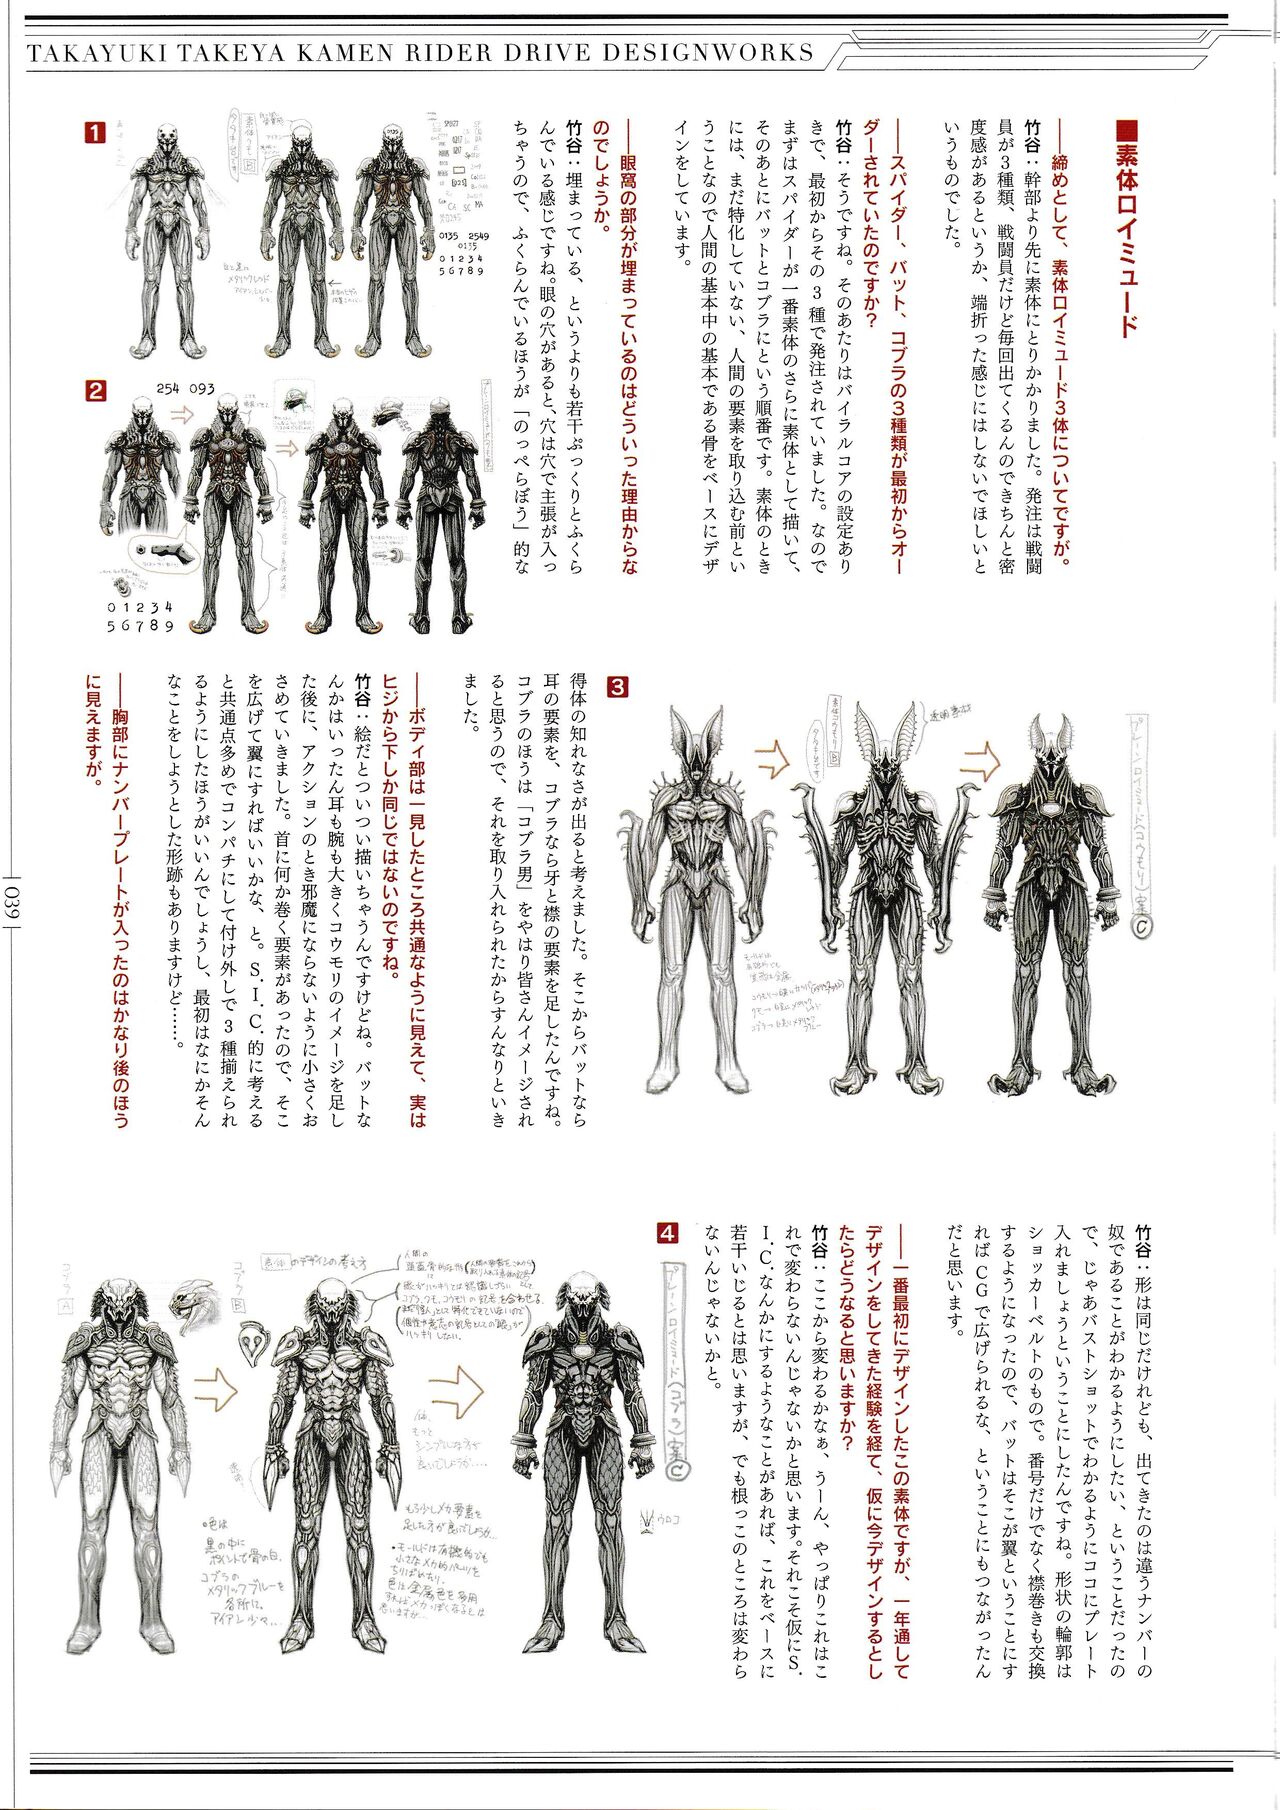 ROIDMUDE Takayuki Takeya Kamen Rider Drive Design Works - 全一卷(1/3) - 6